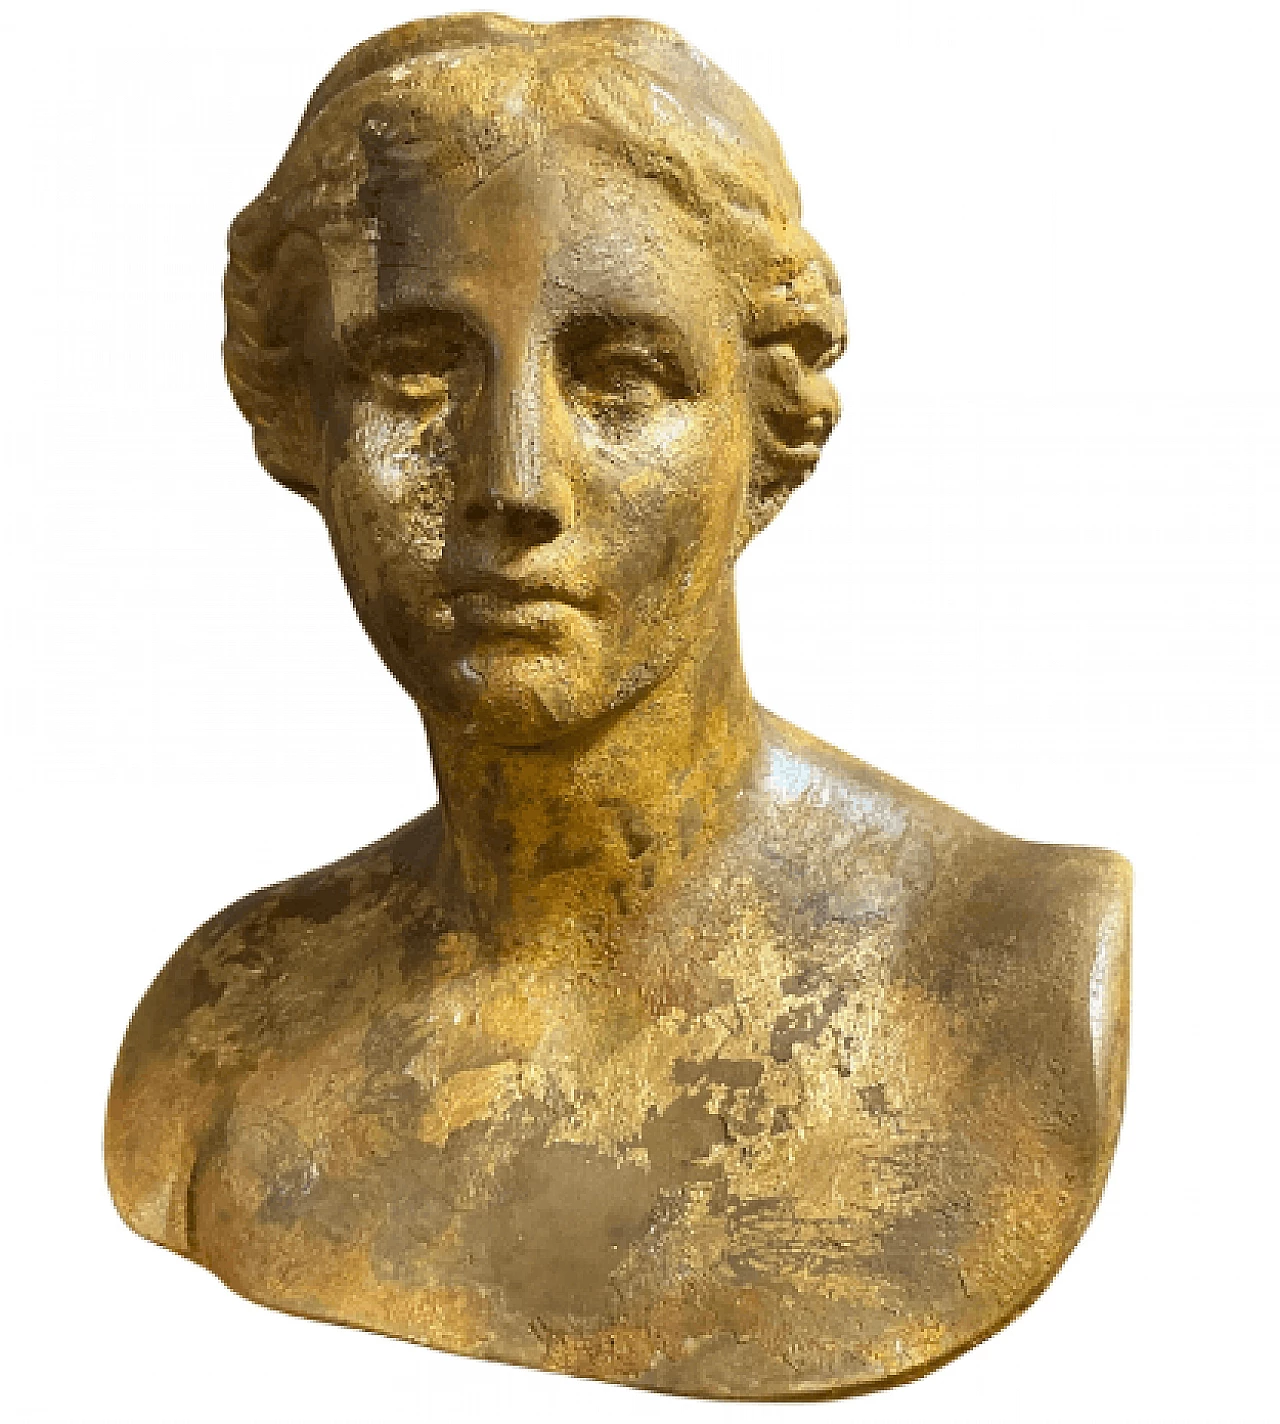 Venus de Milo bust, gilded plaster sculpture, 1950s 1